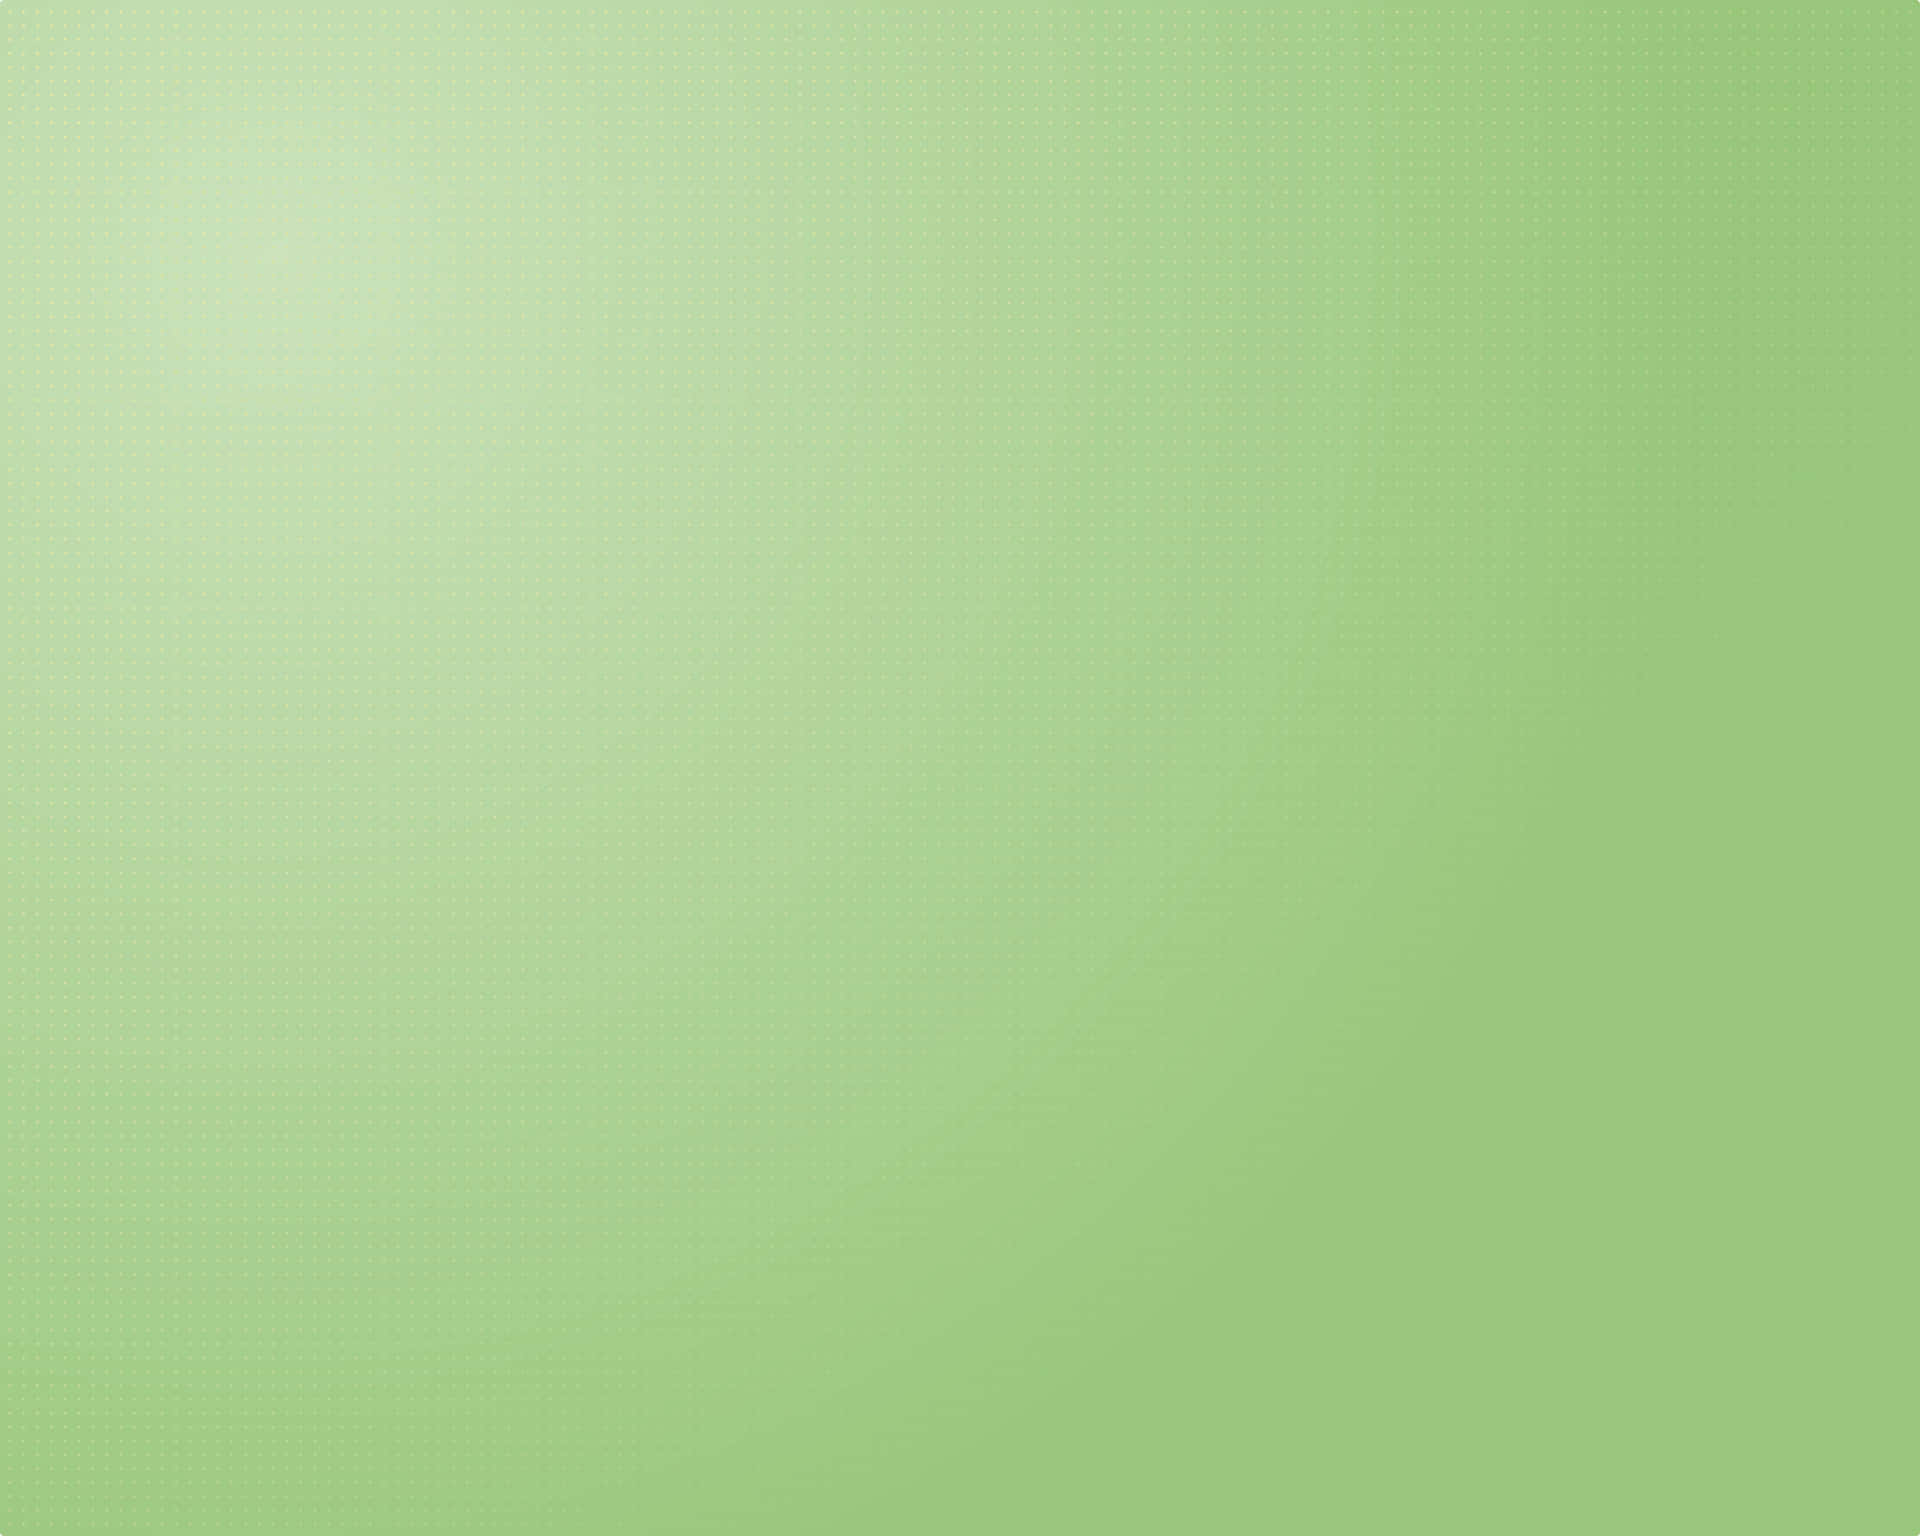 200+] Plain Green Backgrounds